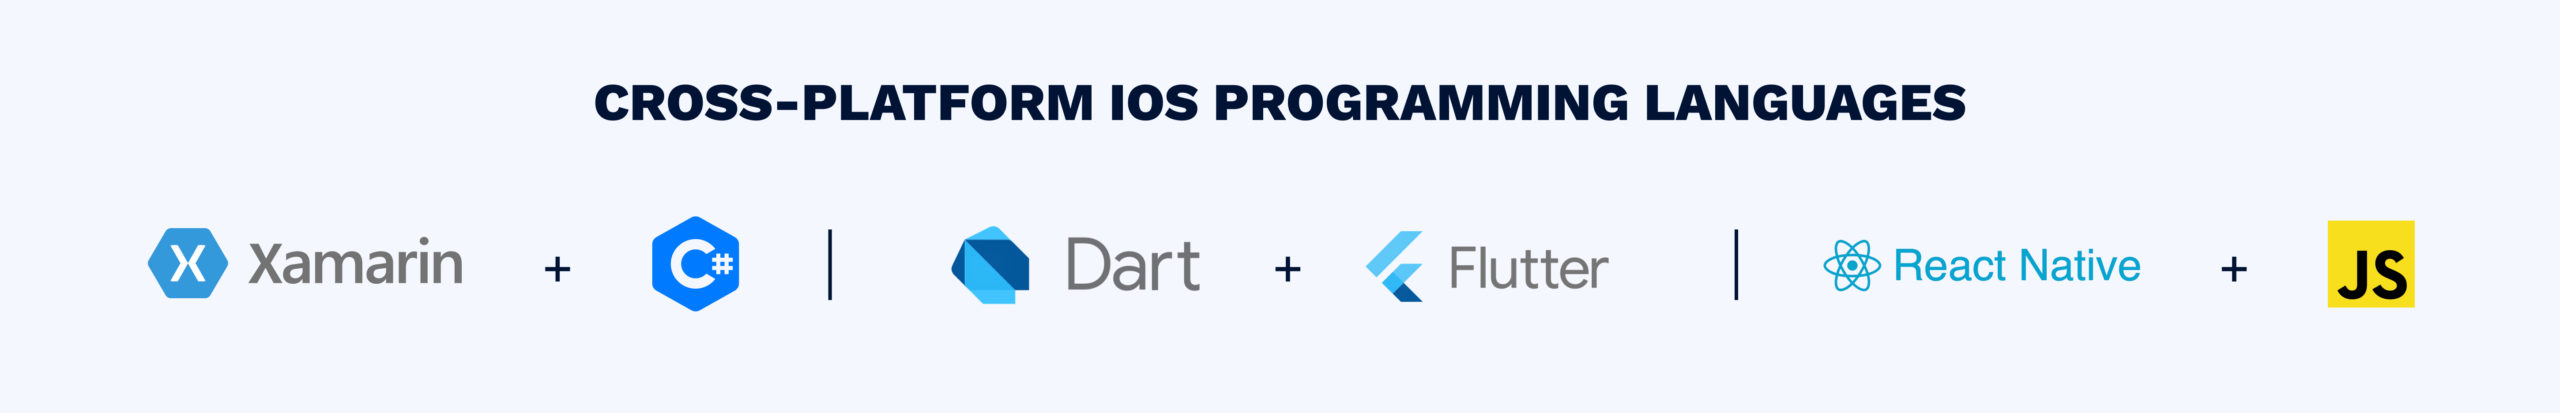 Cross-platform programming languages for iOS app development